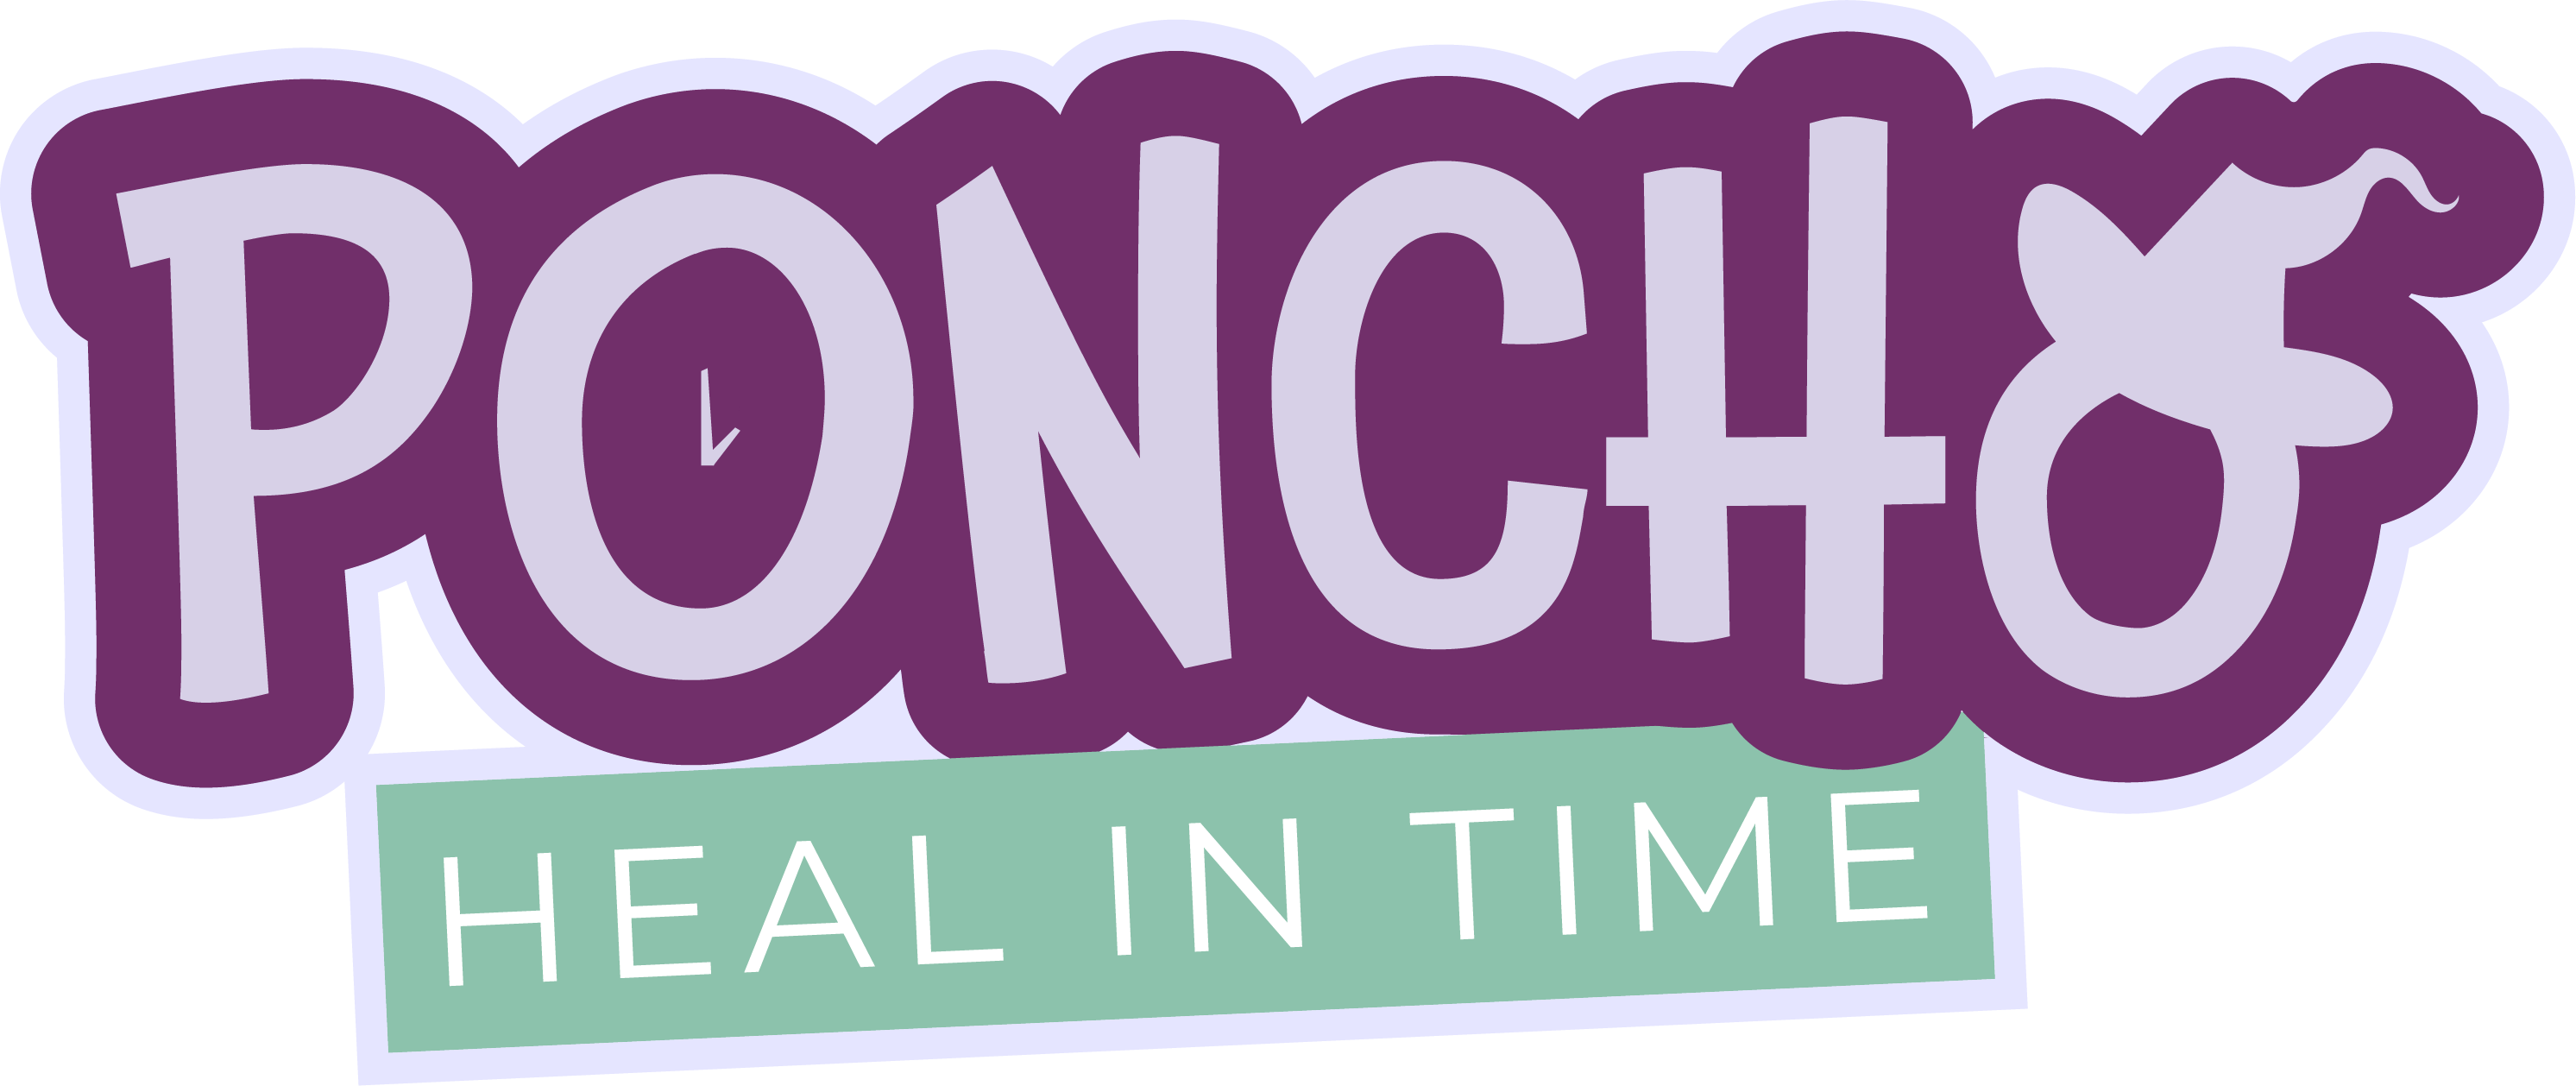 Poncho - Heal in Time (Global Game Jam 2022)